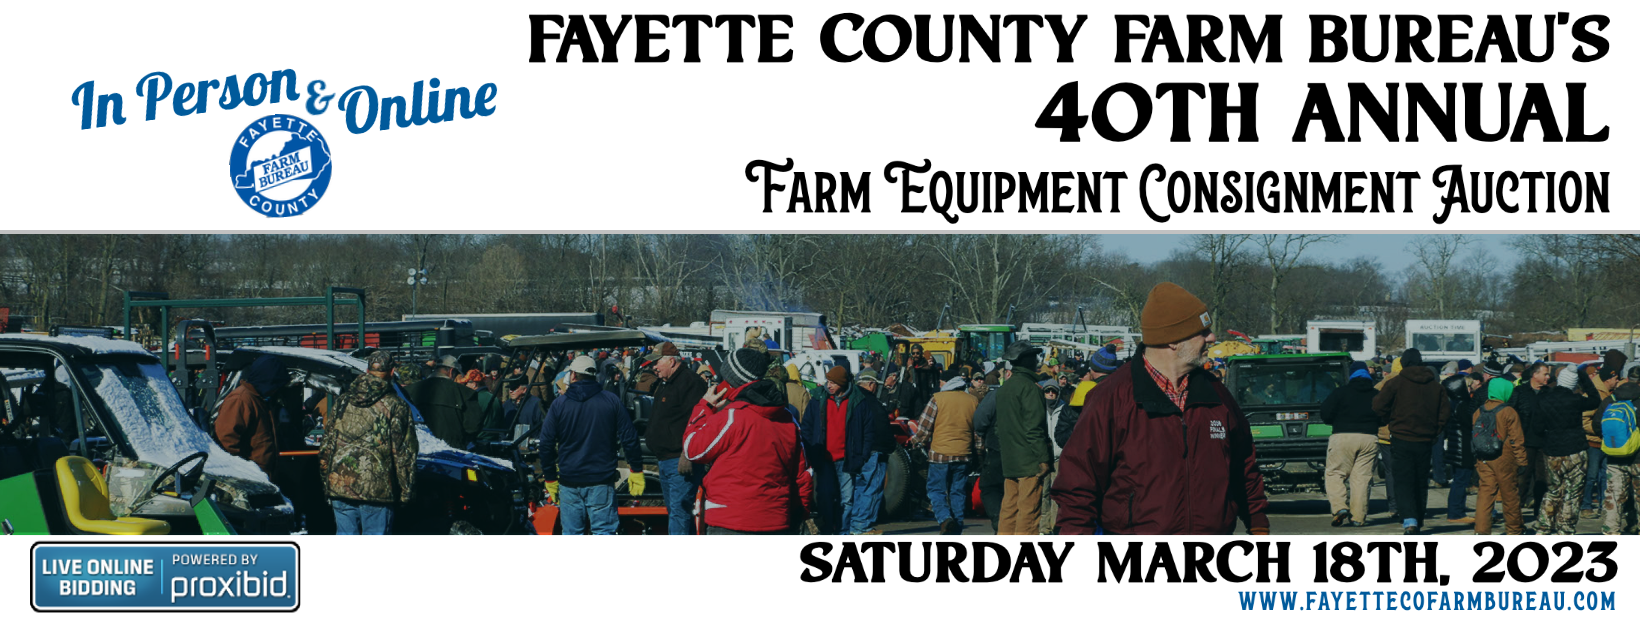 Auction Fayette County Farm Bureau Federation